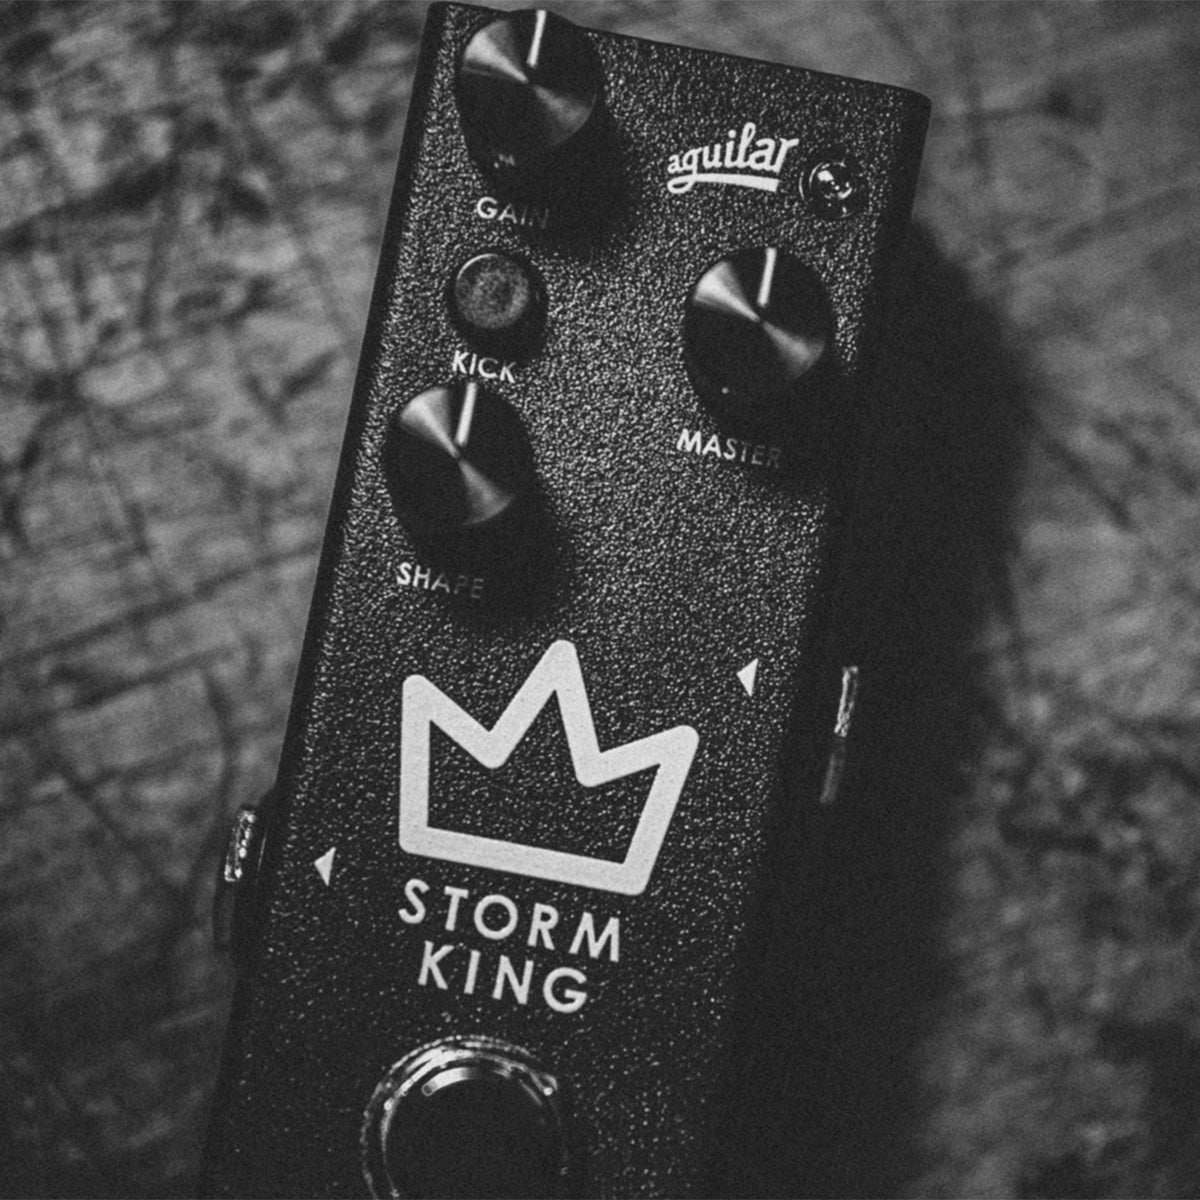 Aguilar Storm King Distortion Fuzz Bass pedal close up